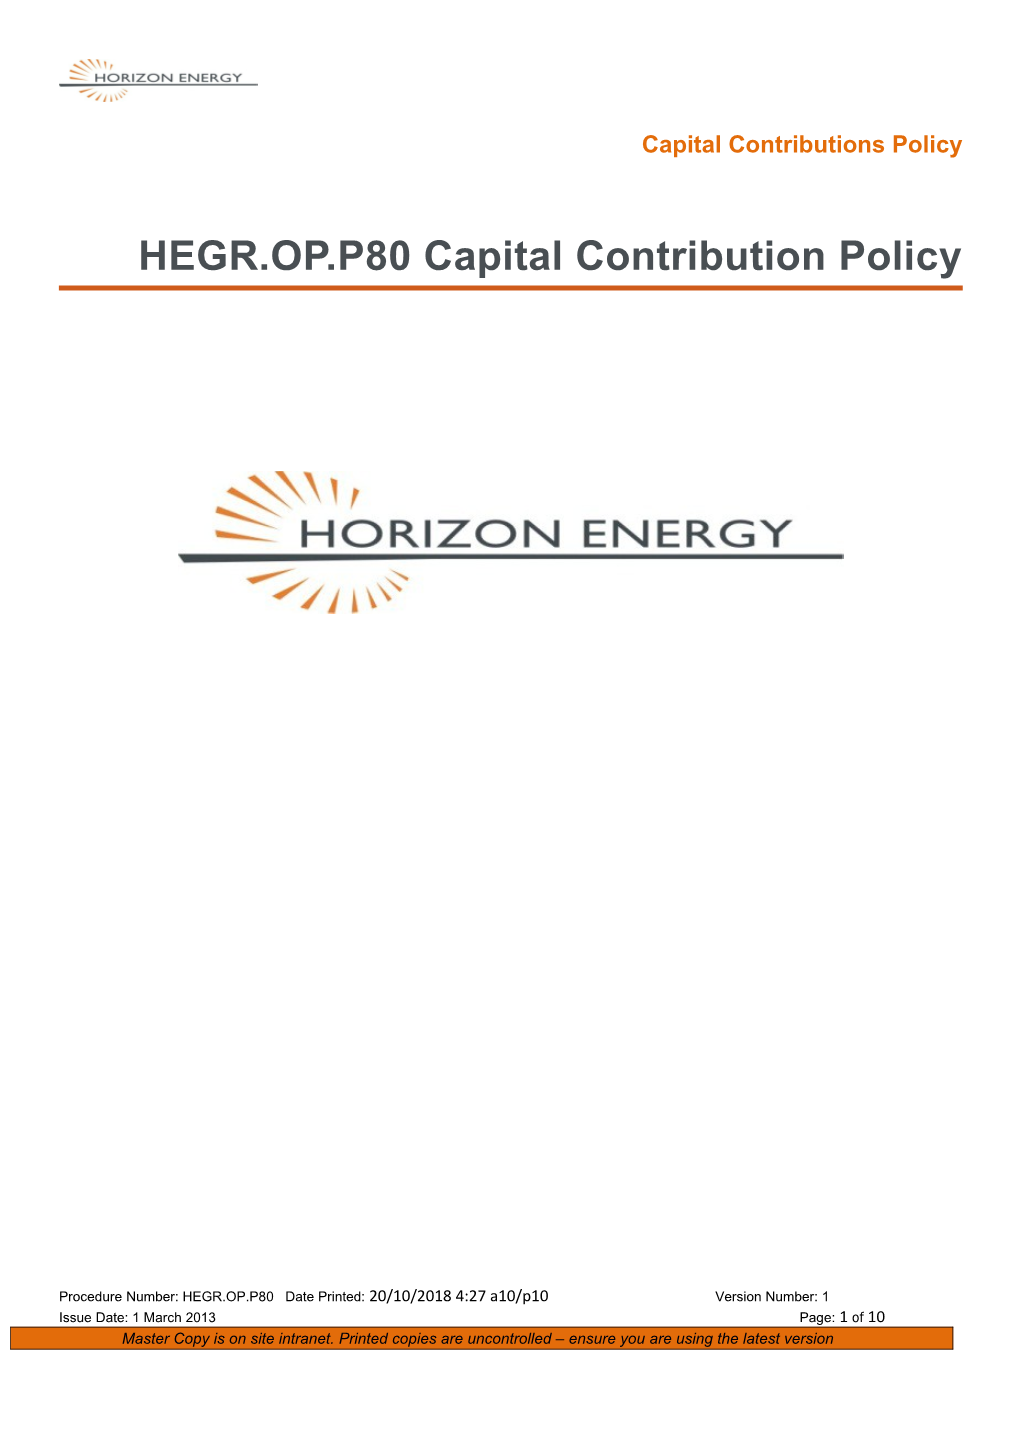 Horizon Energy Capital Contribution Policy